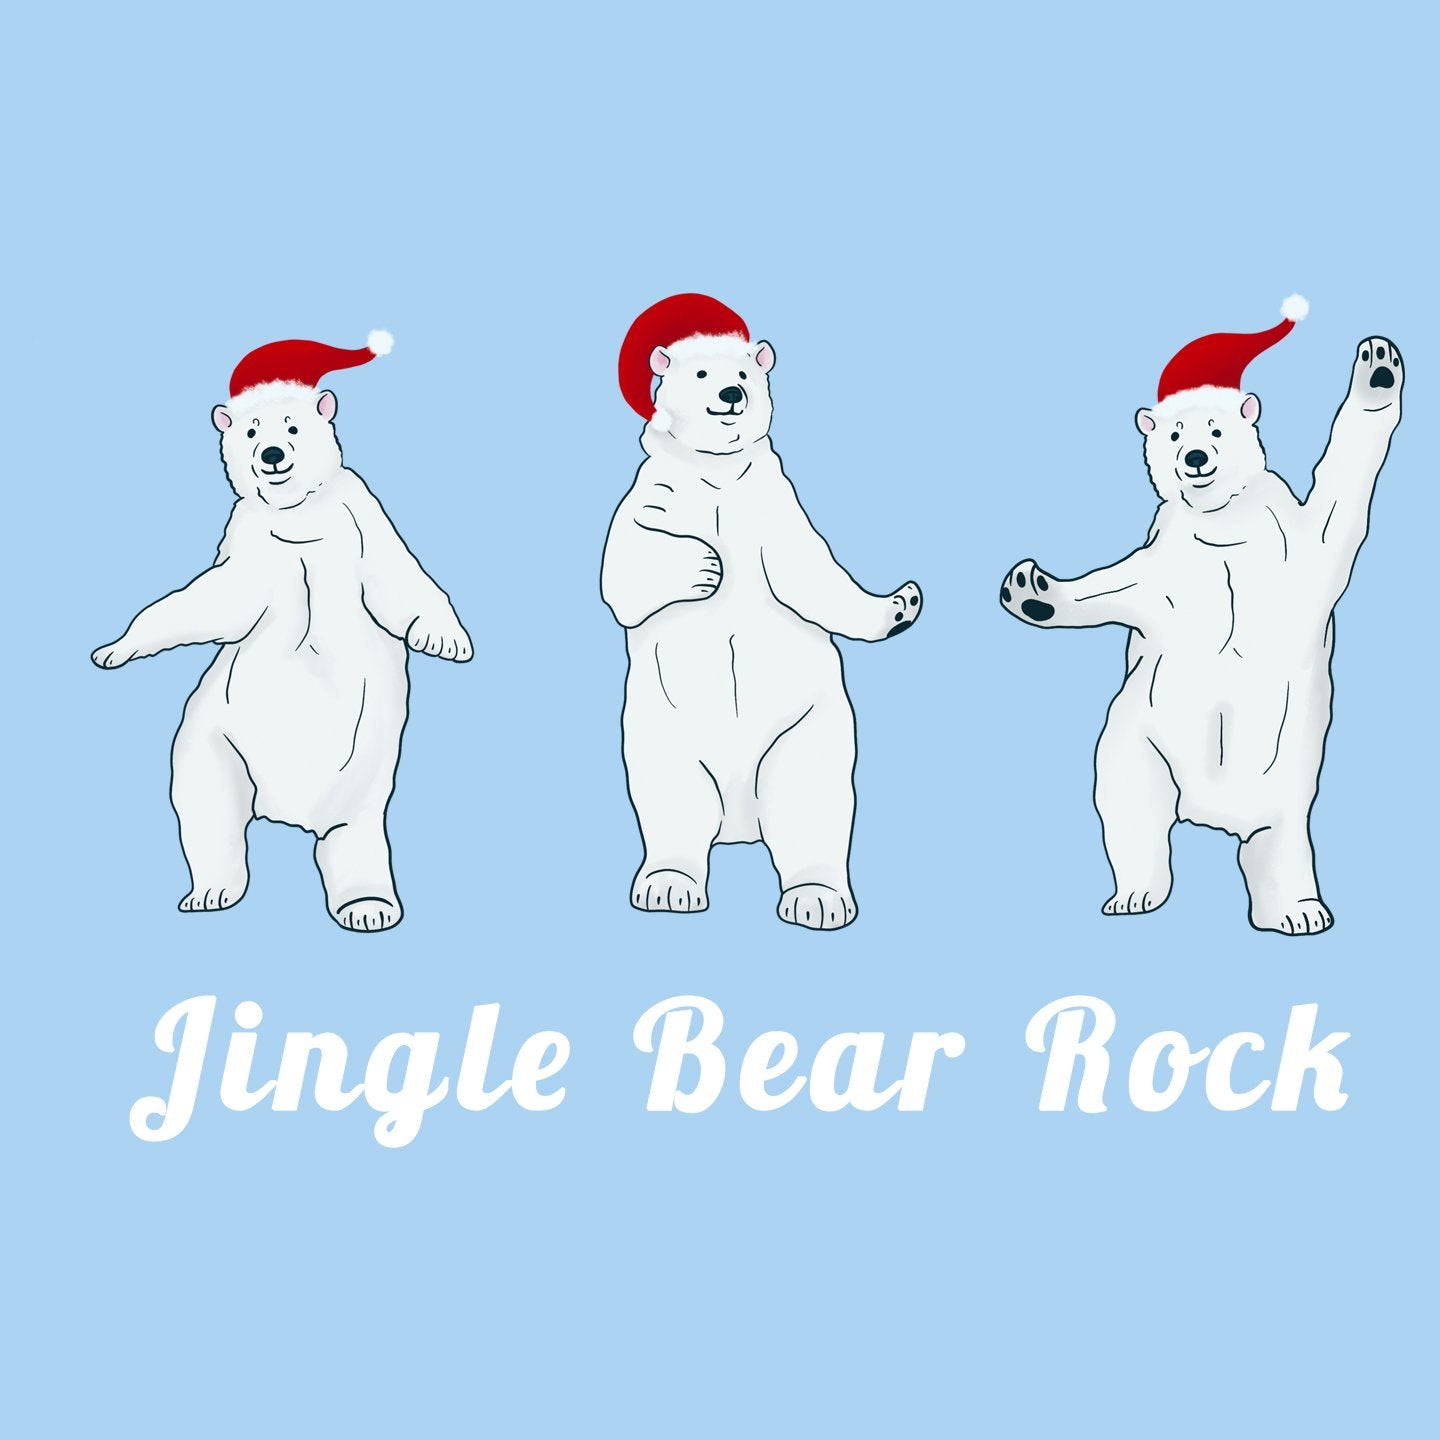 Jingle Bear Rock - Adult Unisex T-Shirt